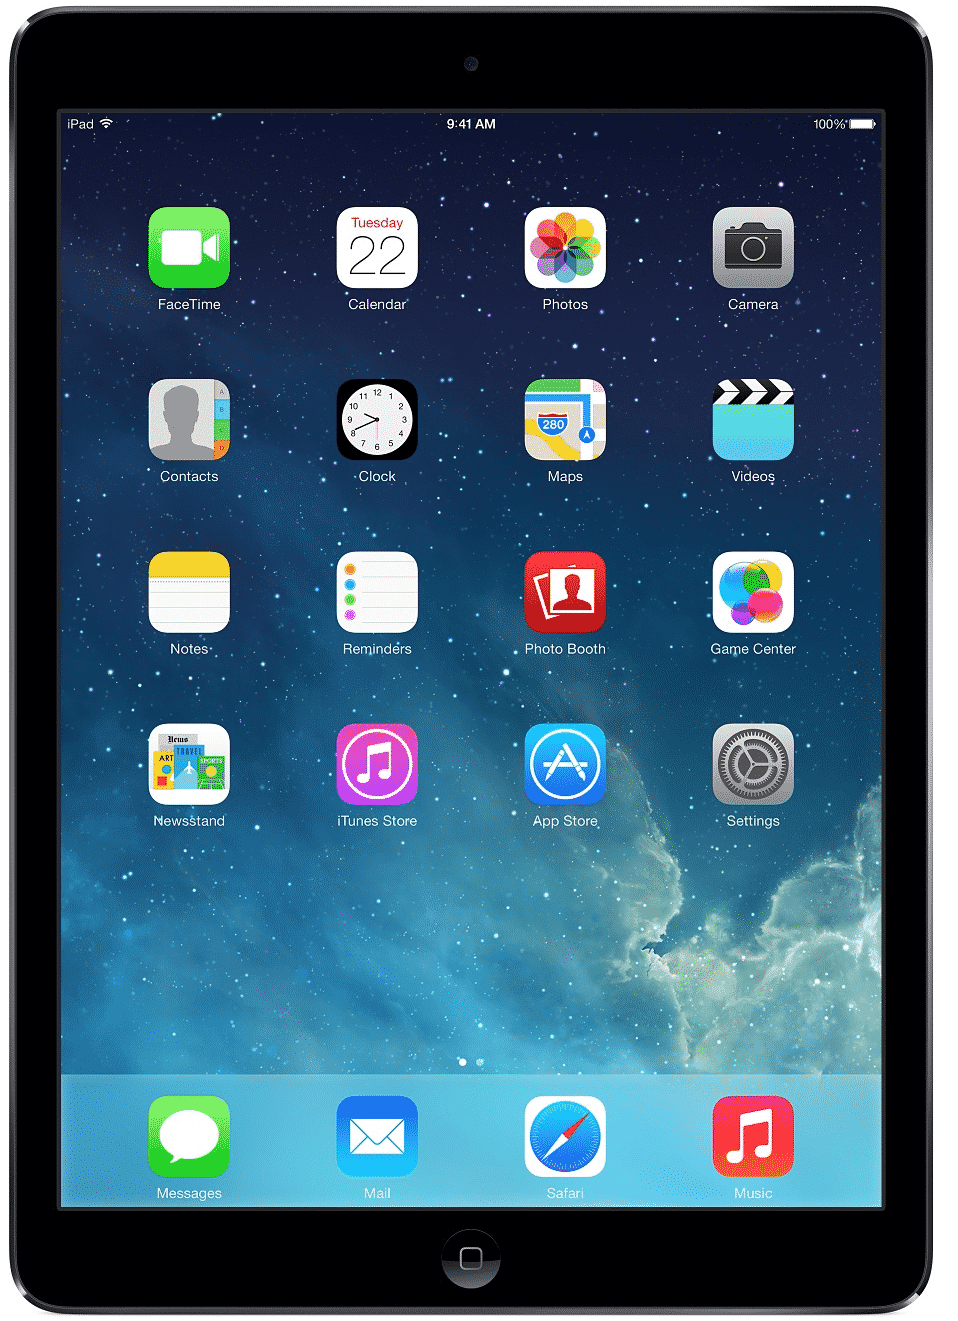 Thanksgiving semafor Pelmel Billig iPad Air 2 reparation - Und. 60 min - 2 års garanti - FixPhone